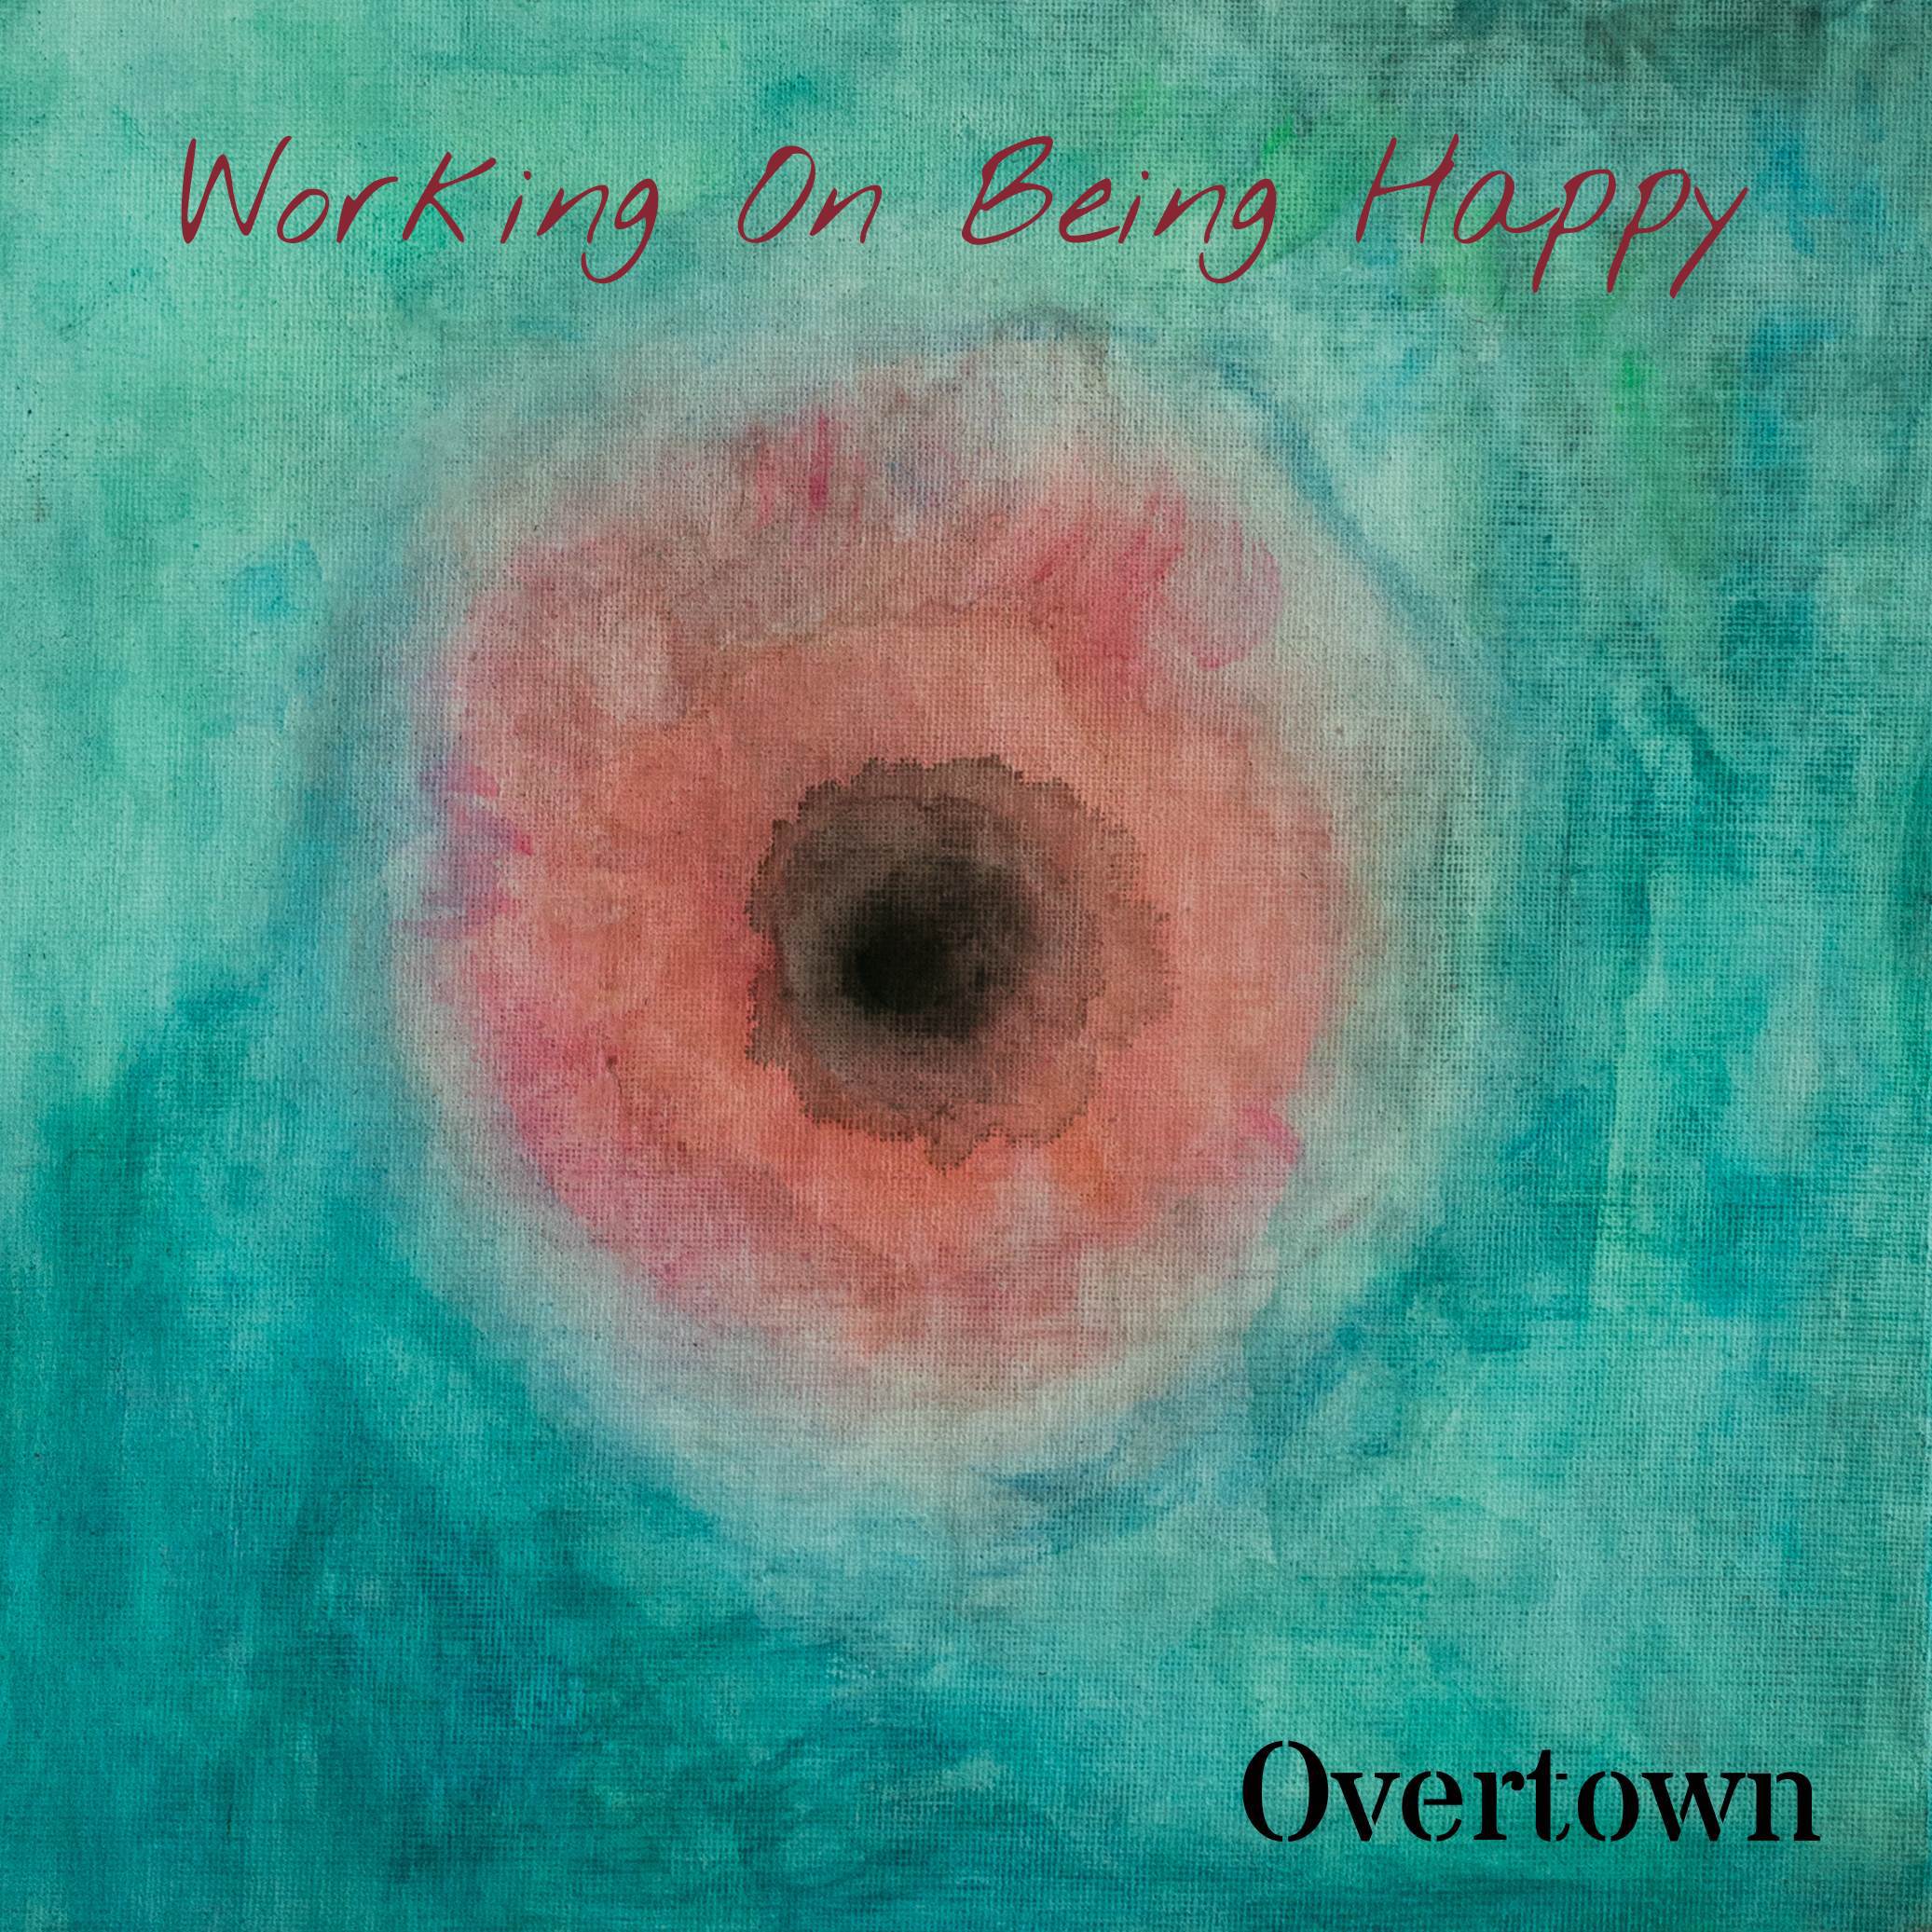 Overtown - The Movie Star